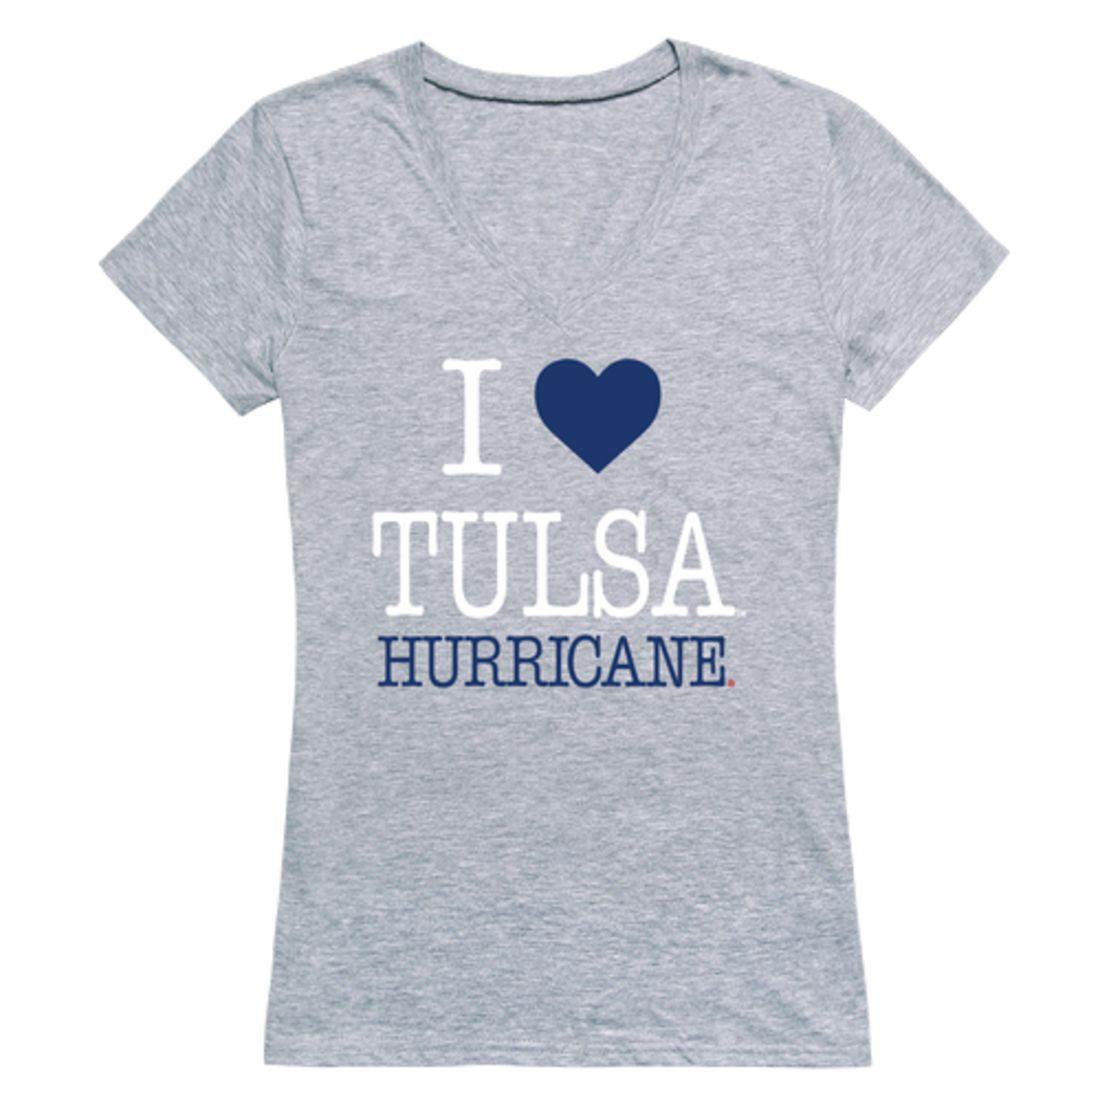 I Love University of Tulsa Golden Golden Hurricane Womens T-Shirt-Campus-Wardrobe